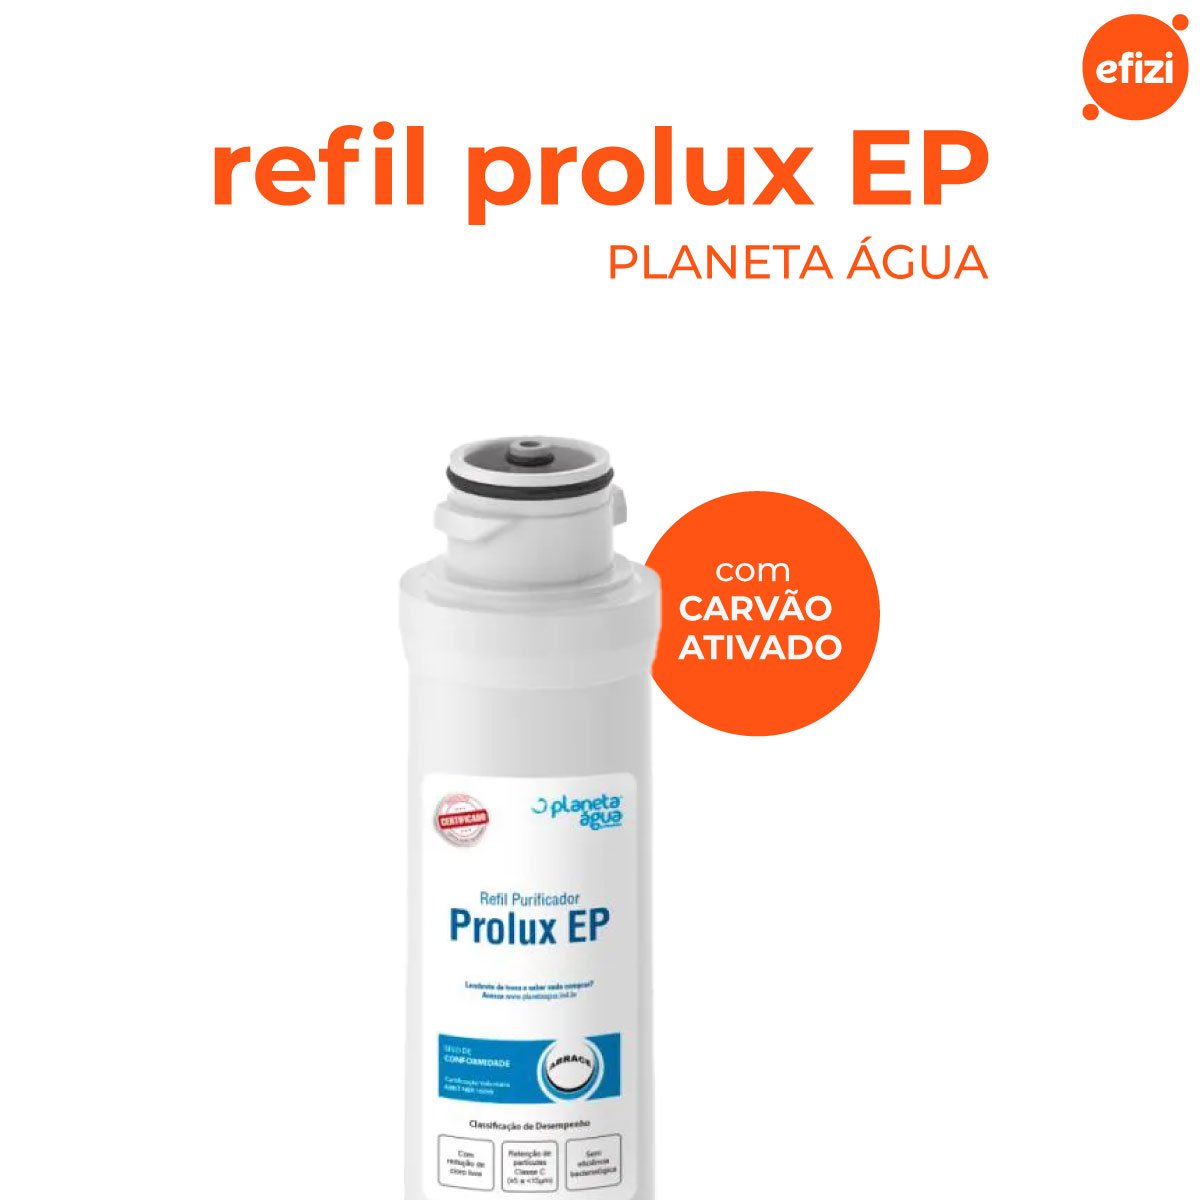 Refil Filtro Prolux Ep para Purificador Eletrolux Planeta Água - 2